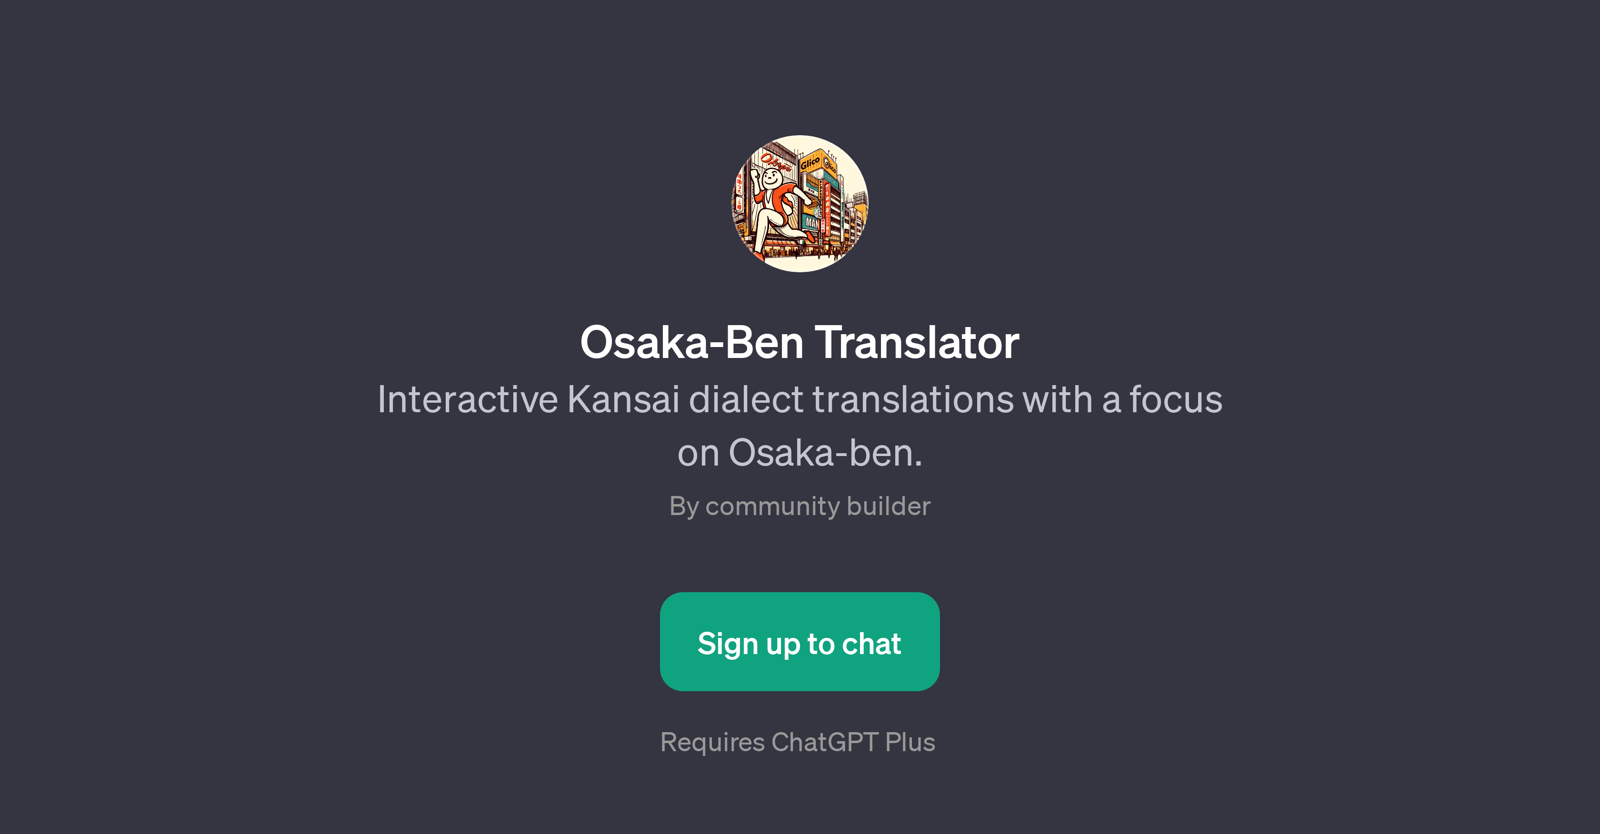 Osaka-Ben Translator website